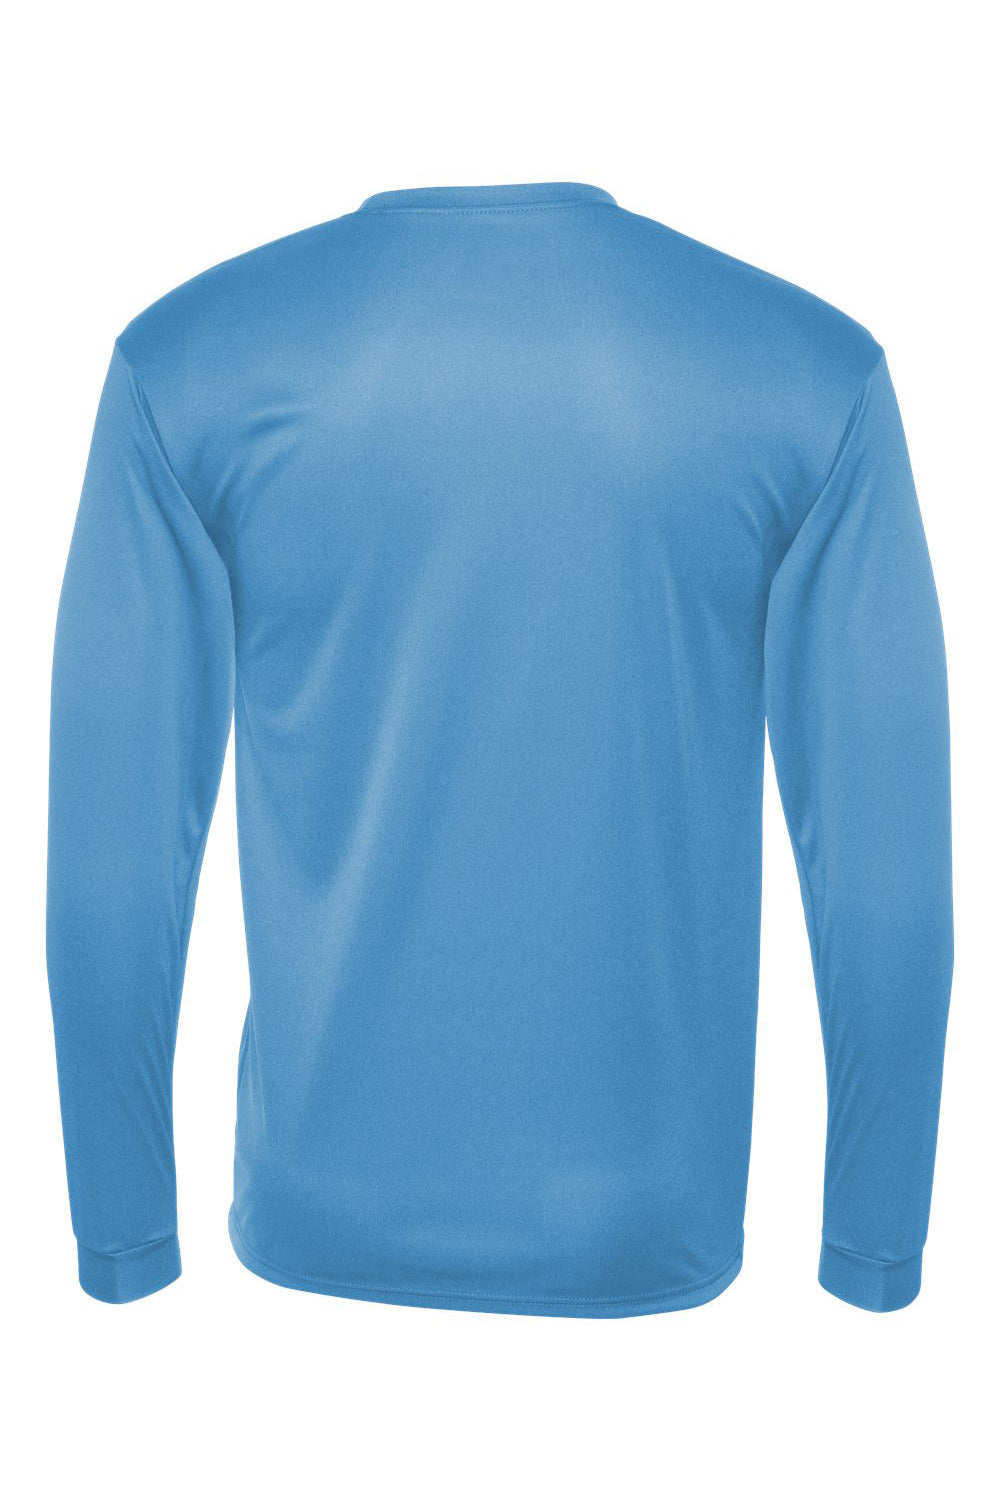 C2 Sport 5104 Mens Performance Moisture Wicking Long Sleeve Crewneck T-Shirt Columbia Blue Flat Back